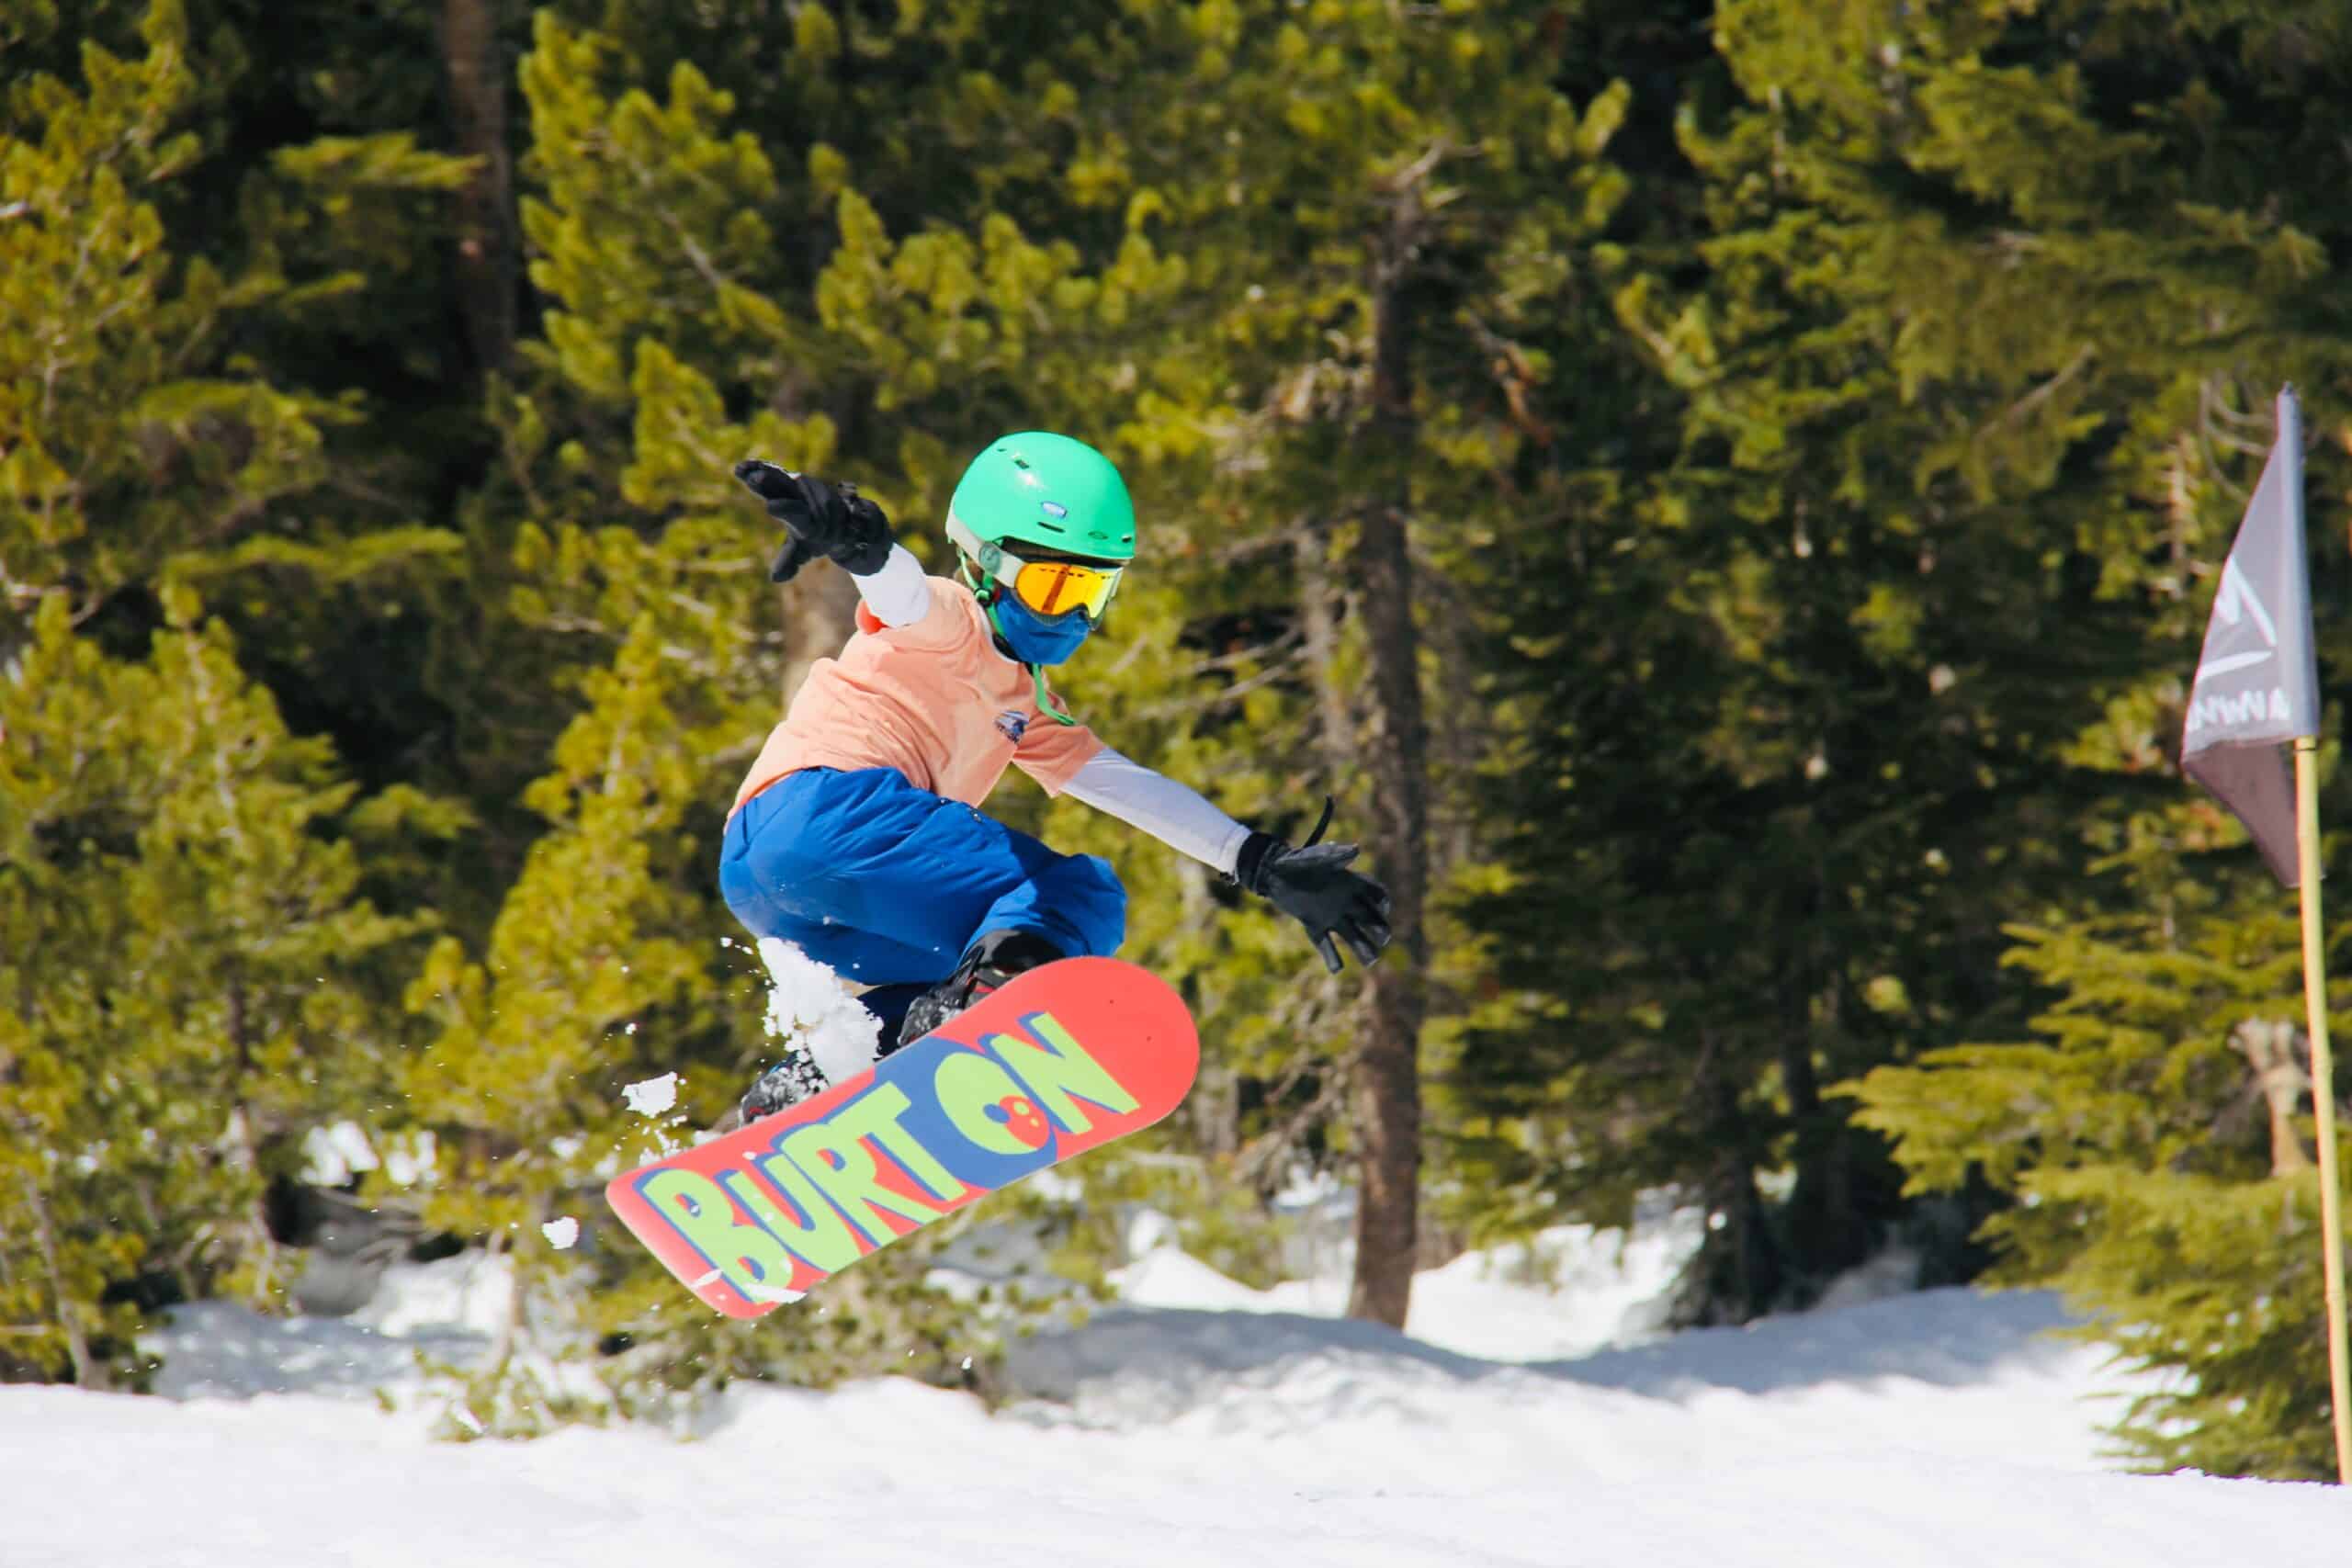 A child snowboarding on holiday. Kids snowboards. Photo by Alexander Simonsen on Unsplash